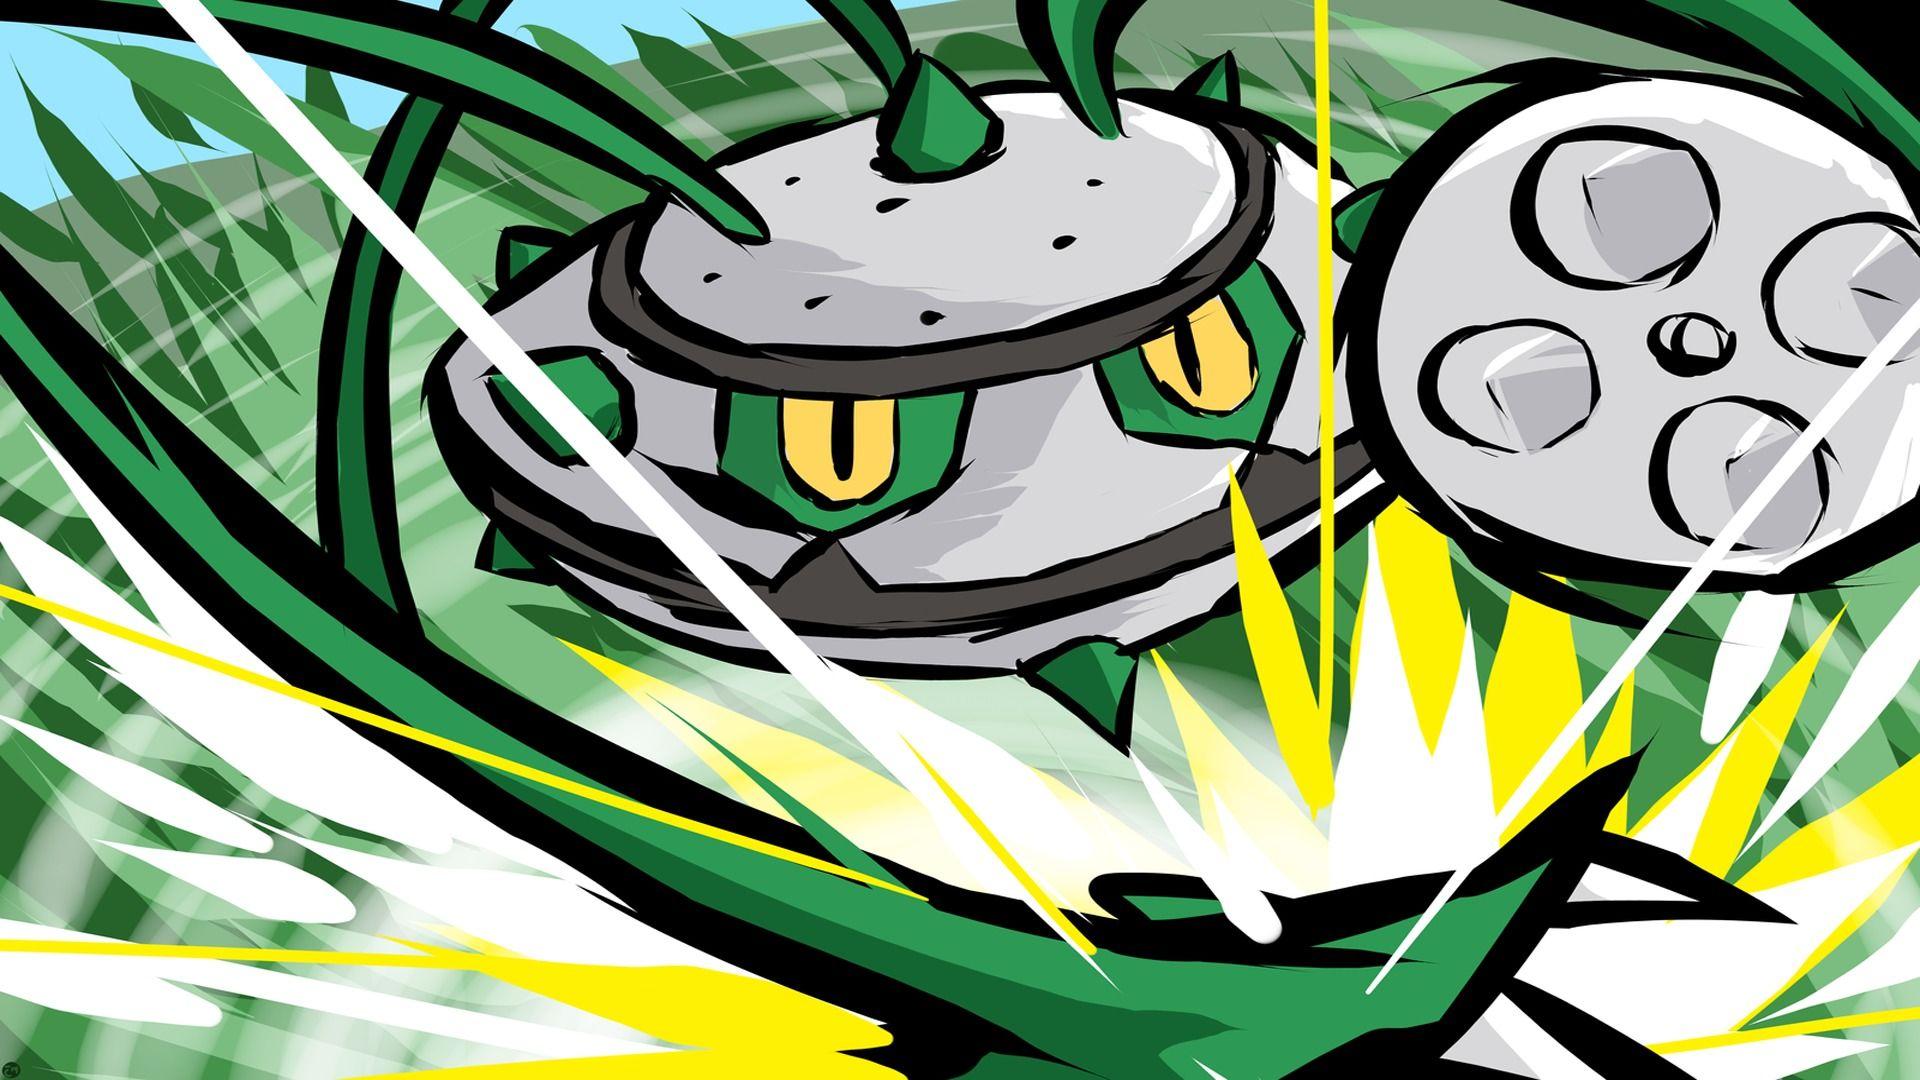 Ferrothorn (Pokémon) HD Wallpaper and Background Image